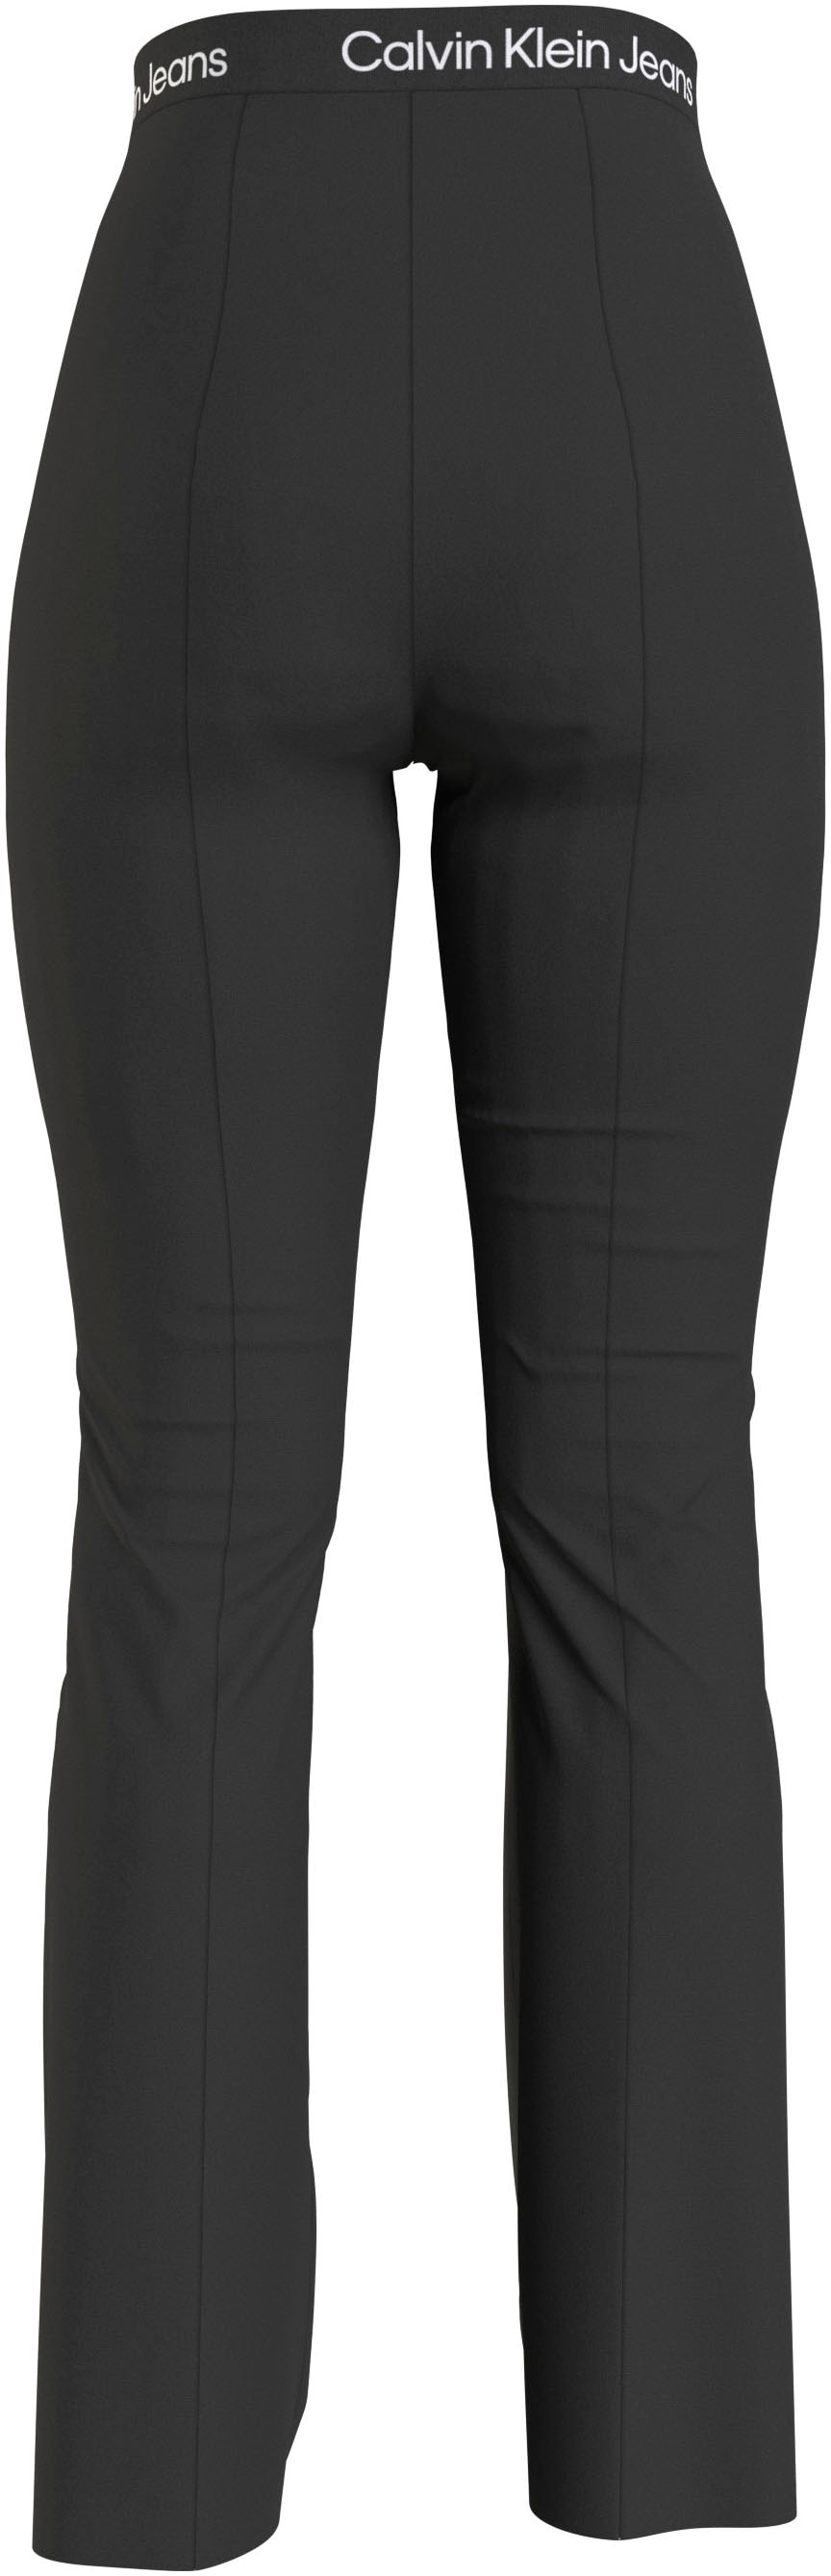 ♕ Calvin Klein Jeans auf LEGGING« FLARE MILANO Leggings »TAPE versandkostenfrei